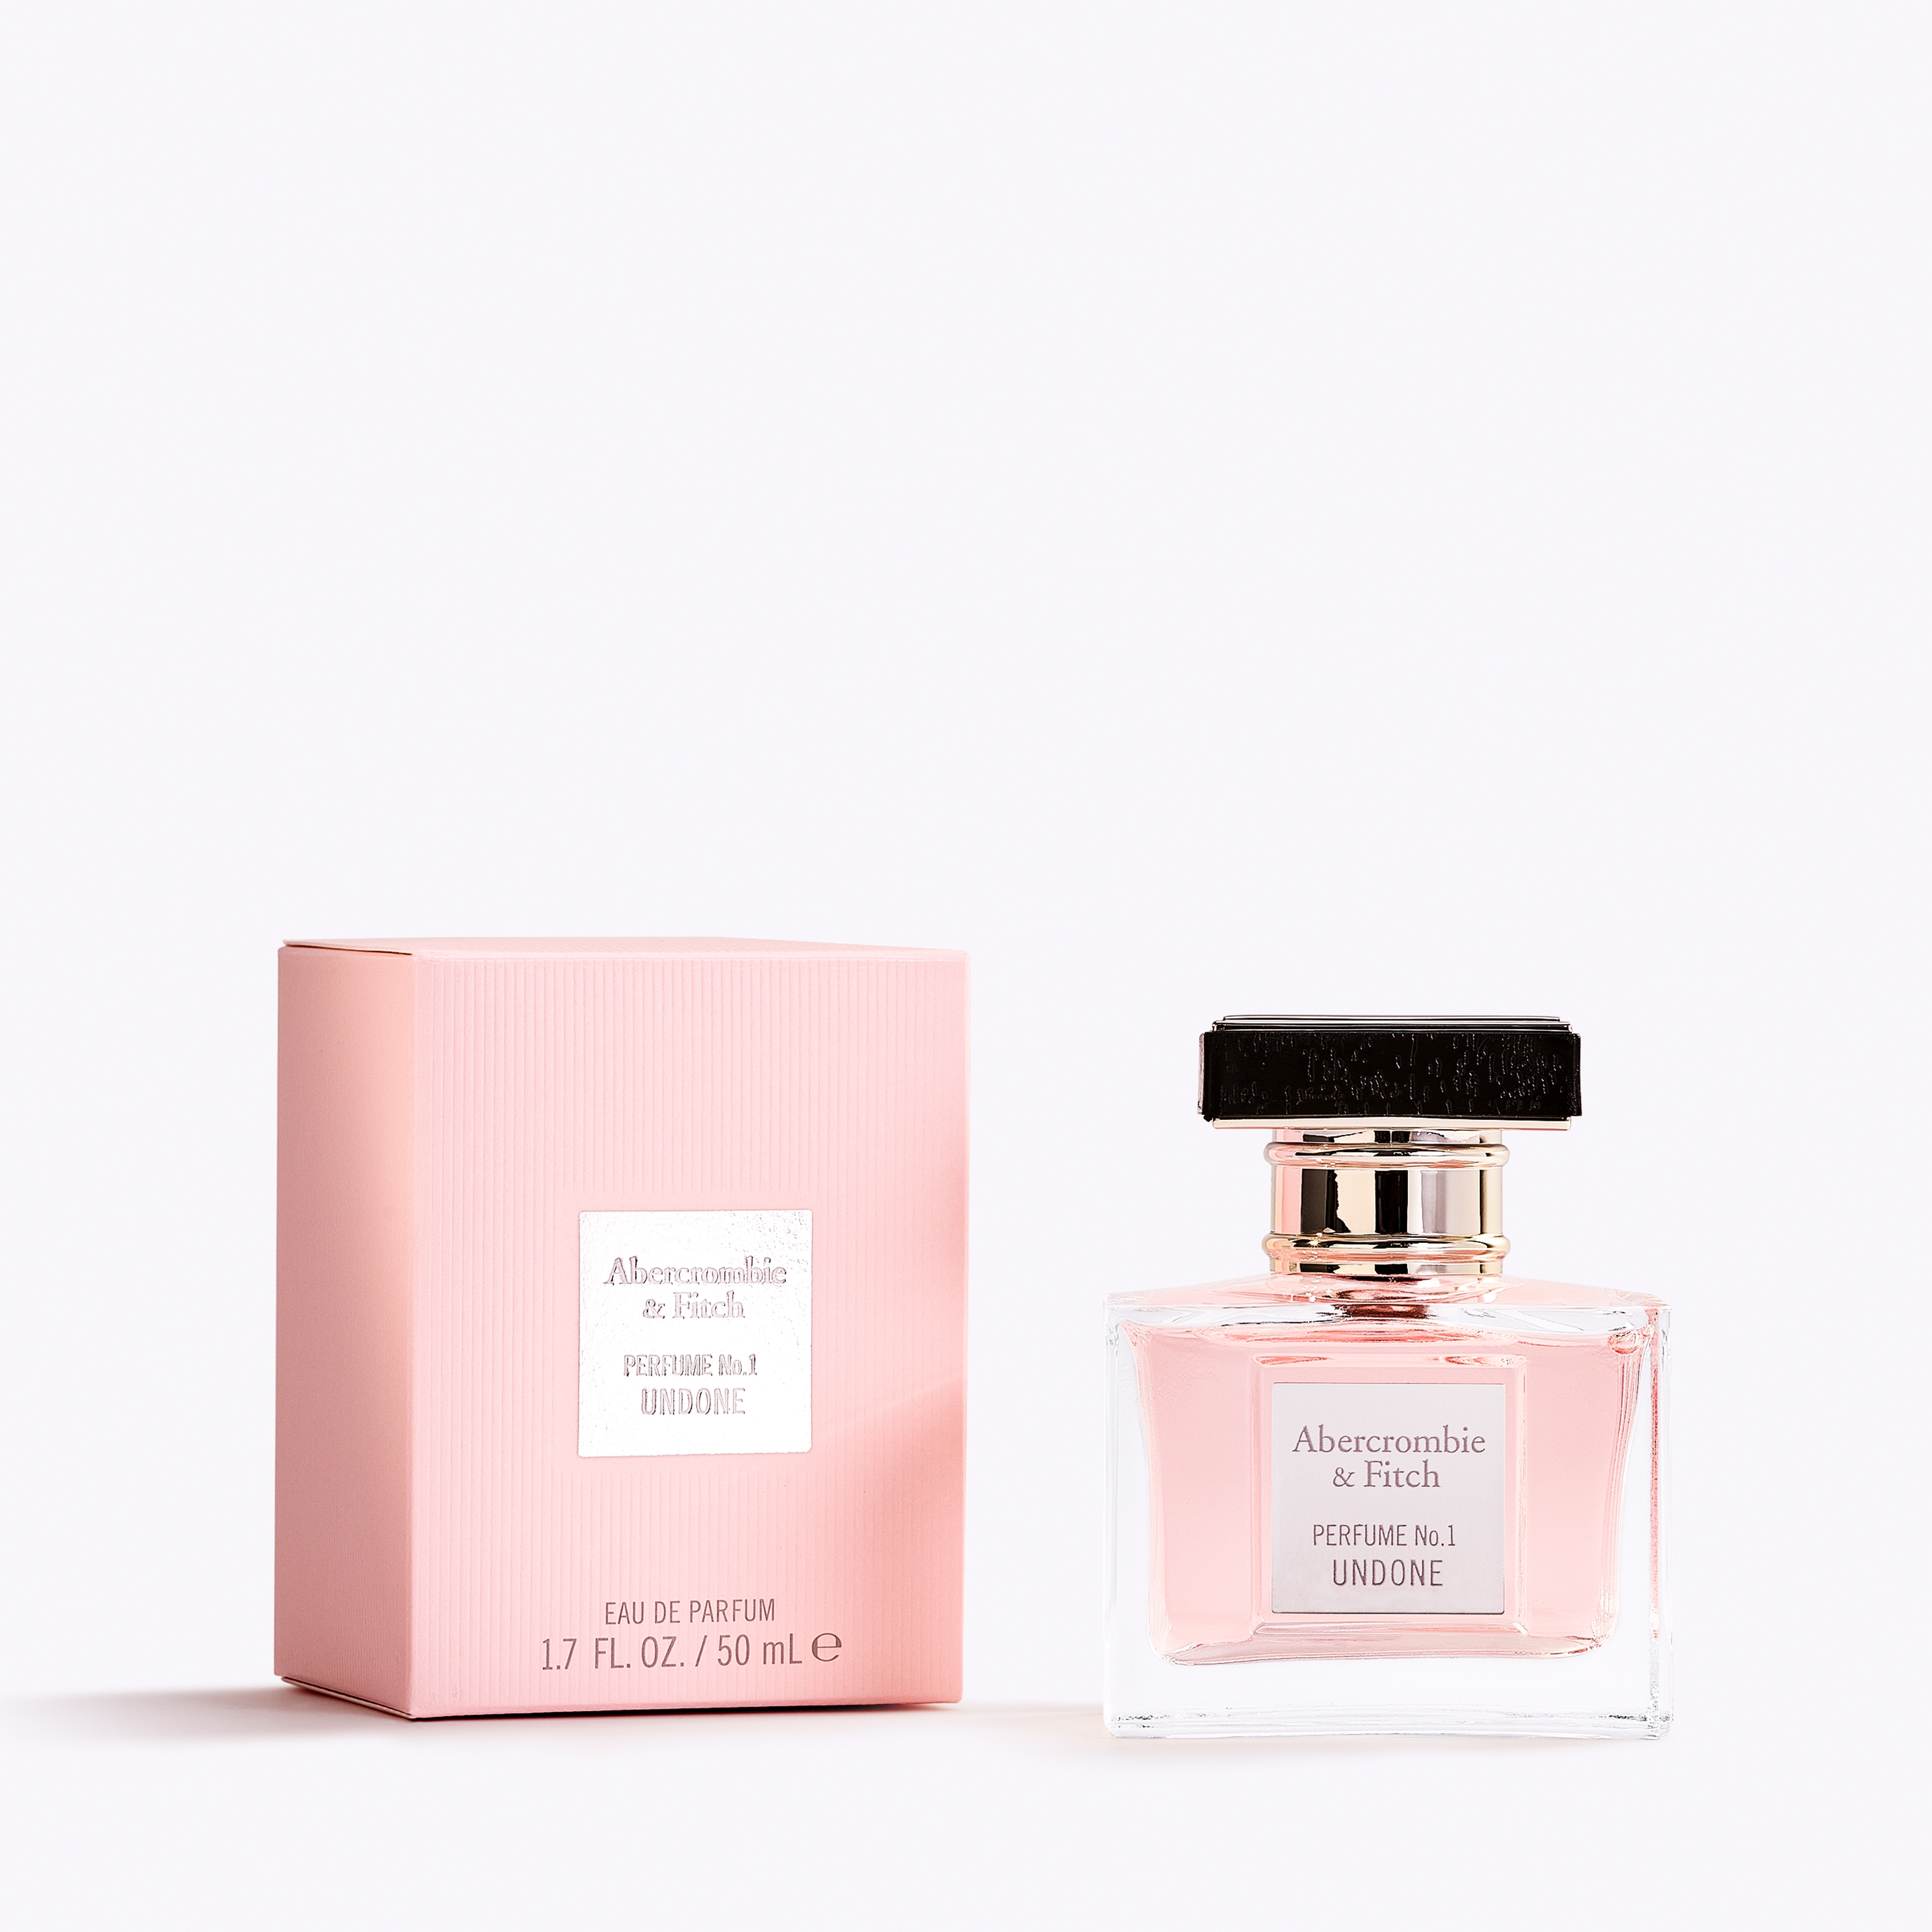 abercrombie fitch perfume no 1 undone